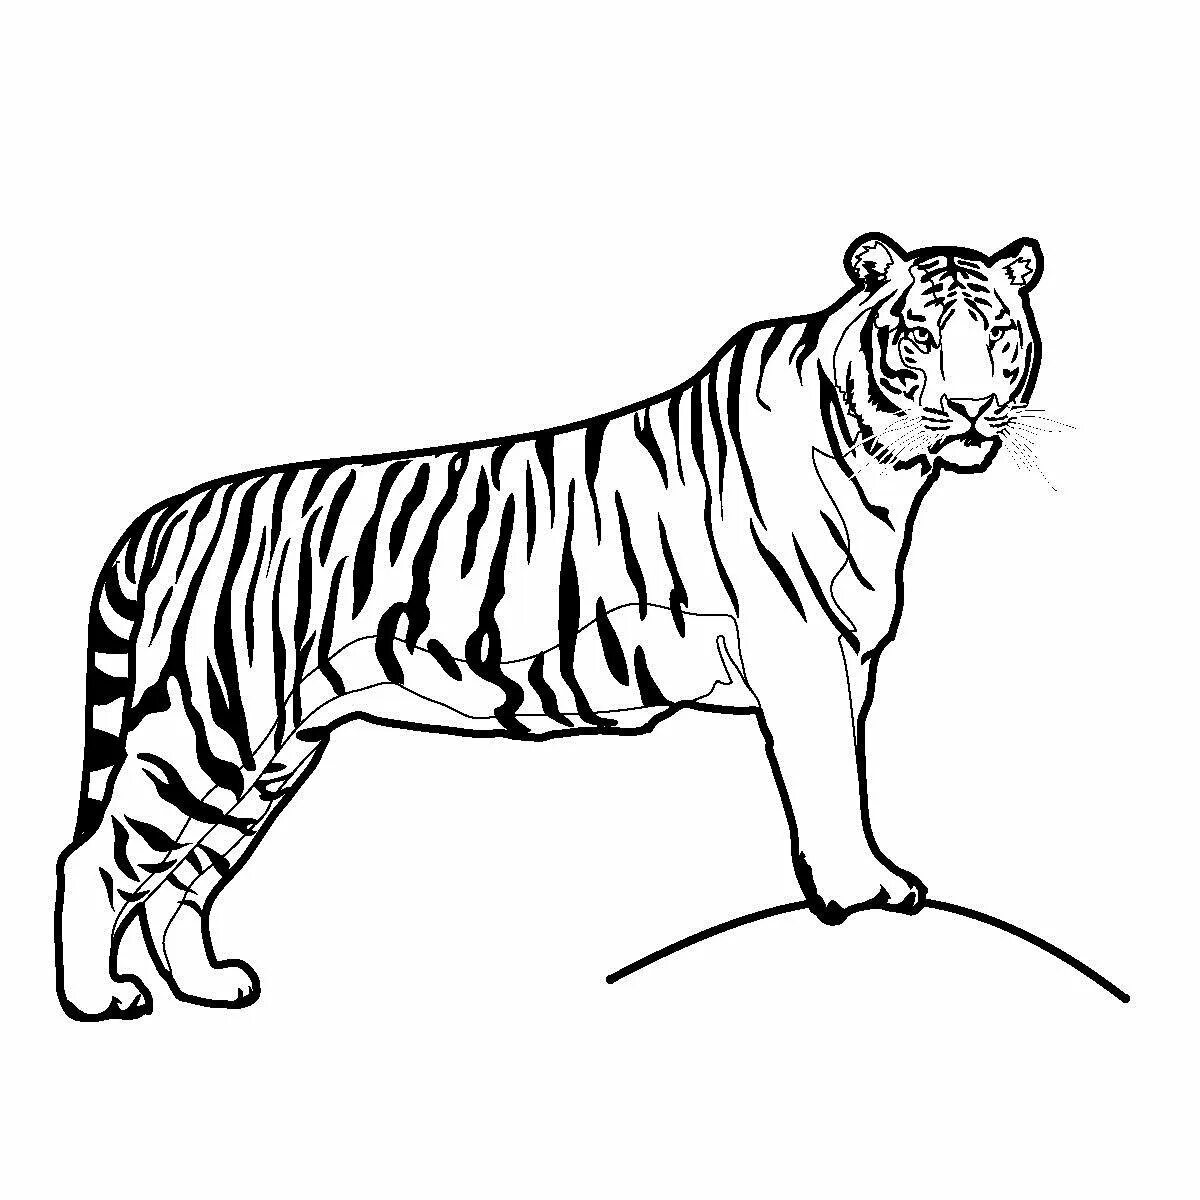 Ussuri tiger #17